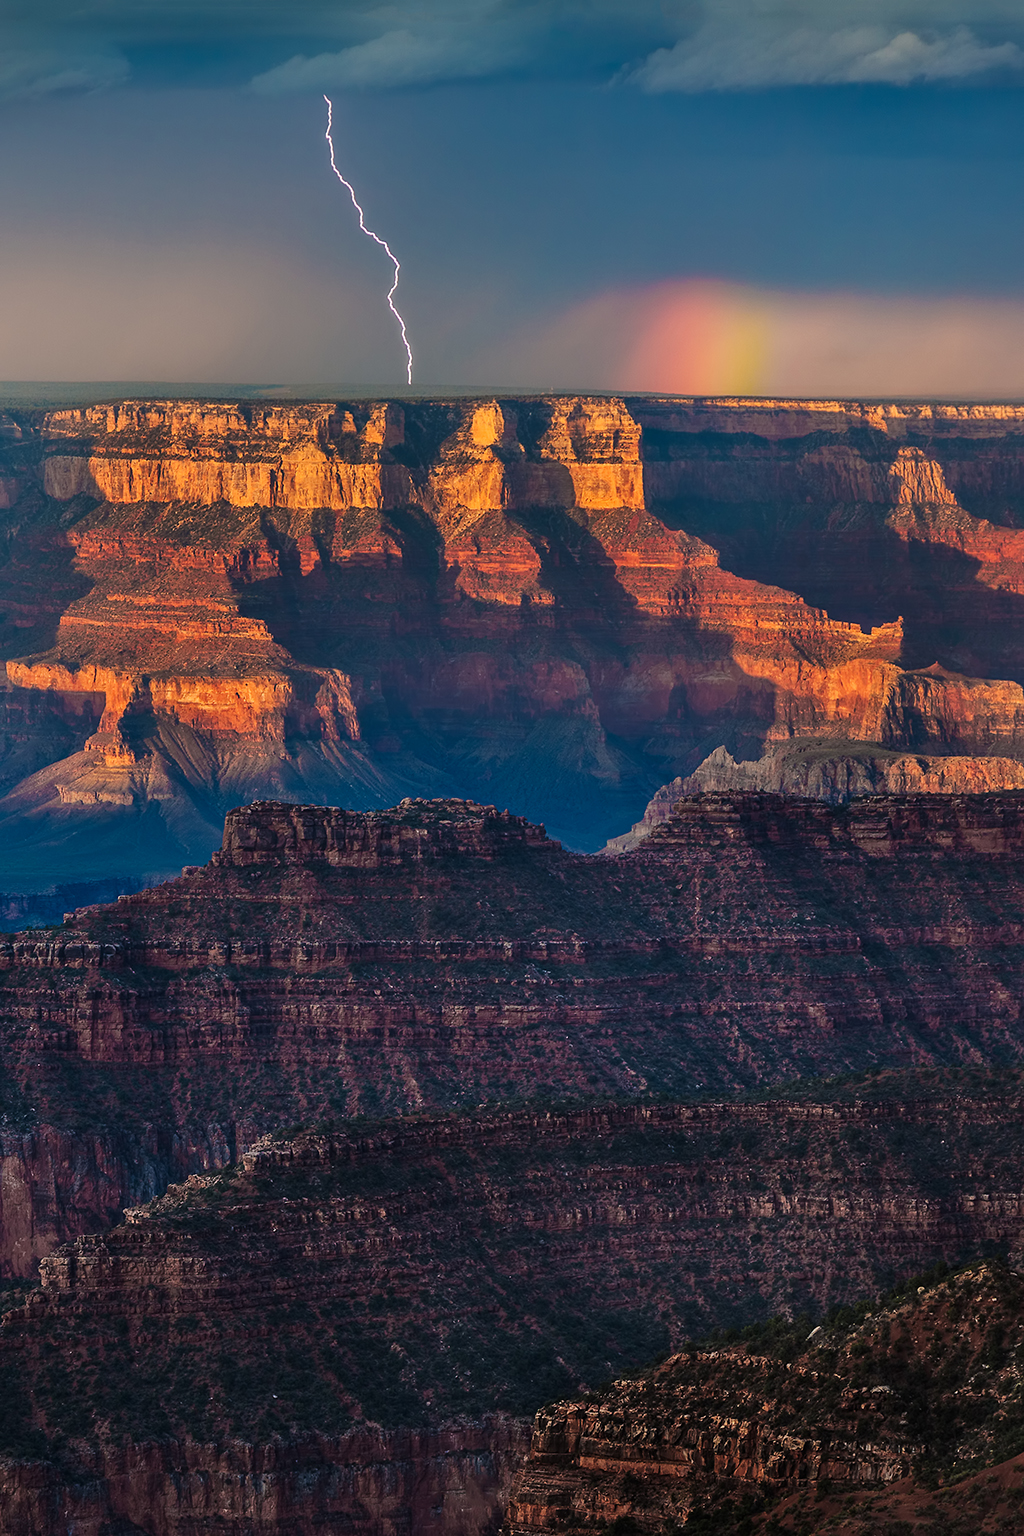 Photo capturing both lightning and a rainbow.